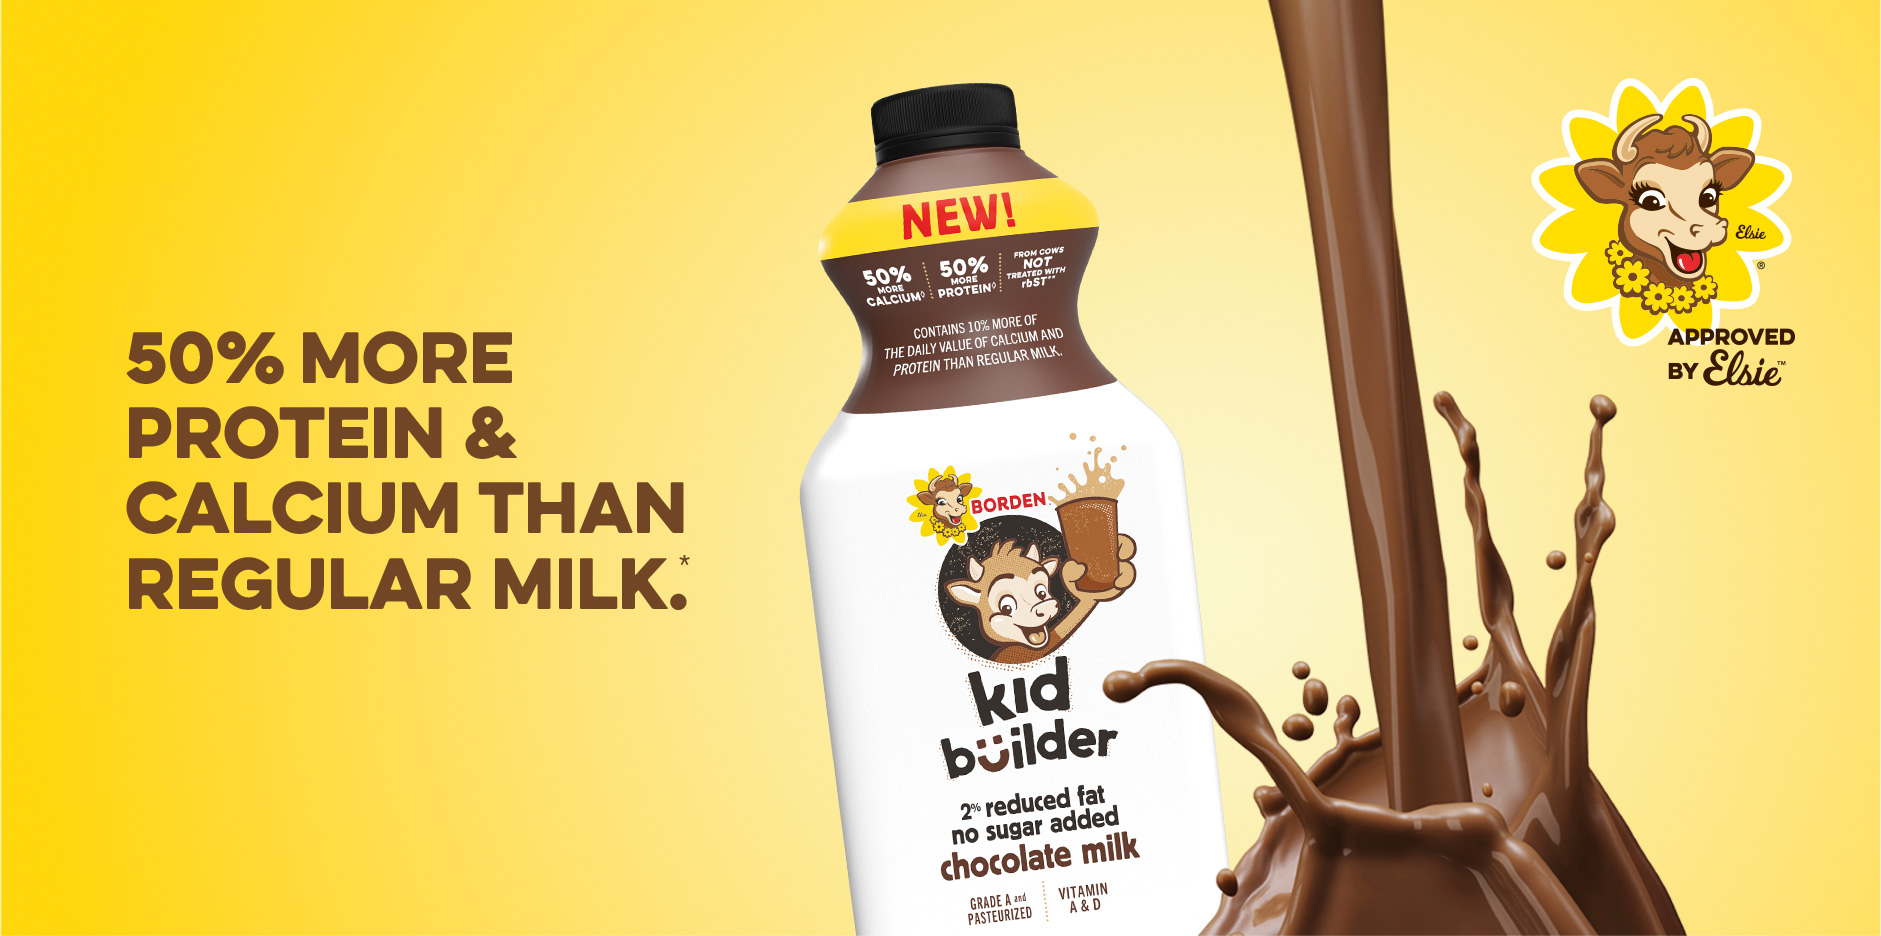 Borden launches nutritionally enhanced milk for kids